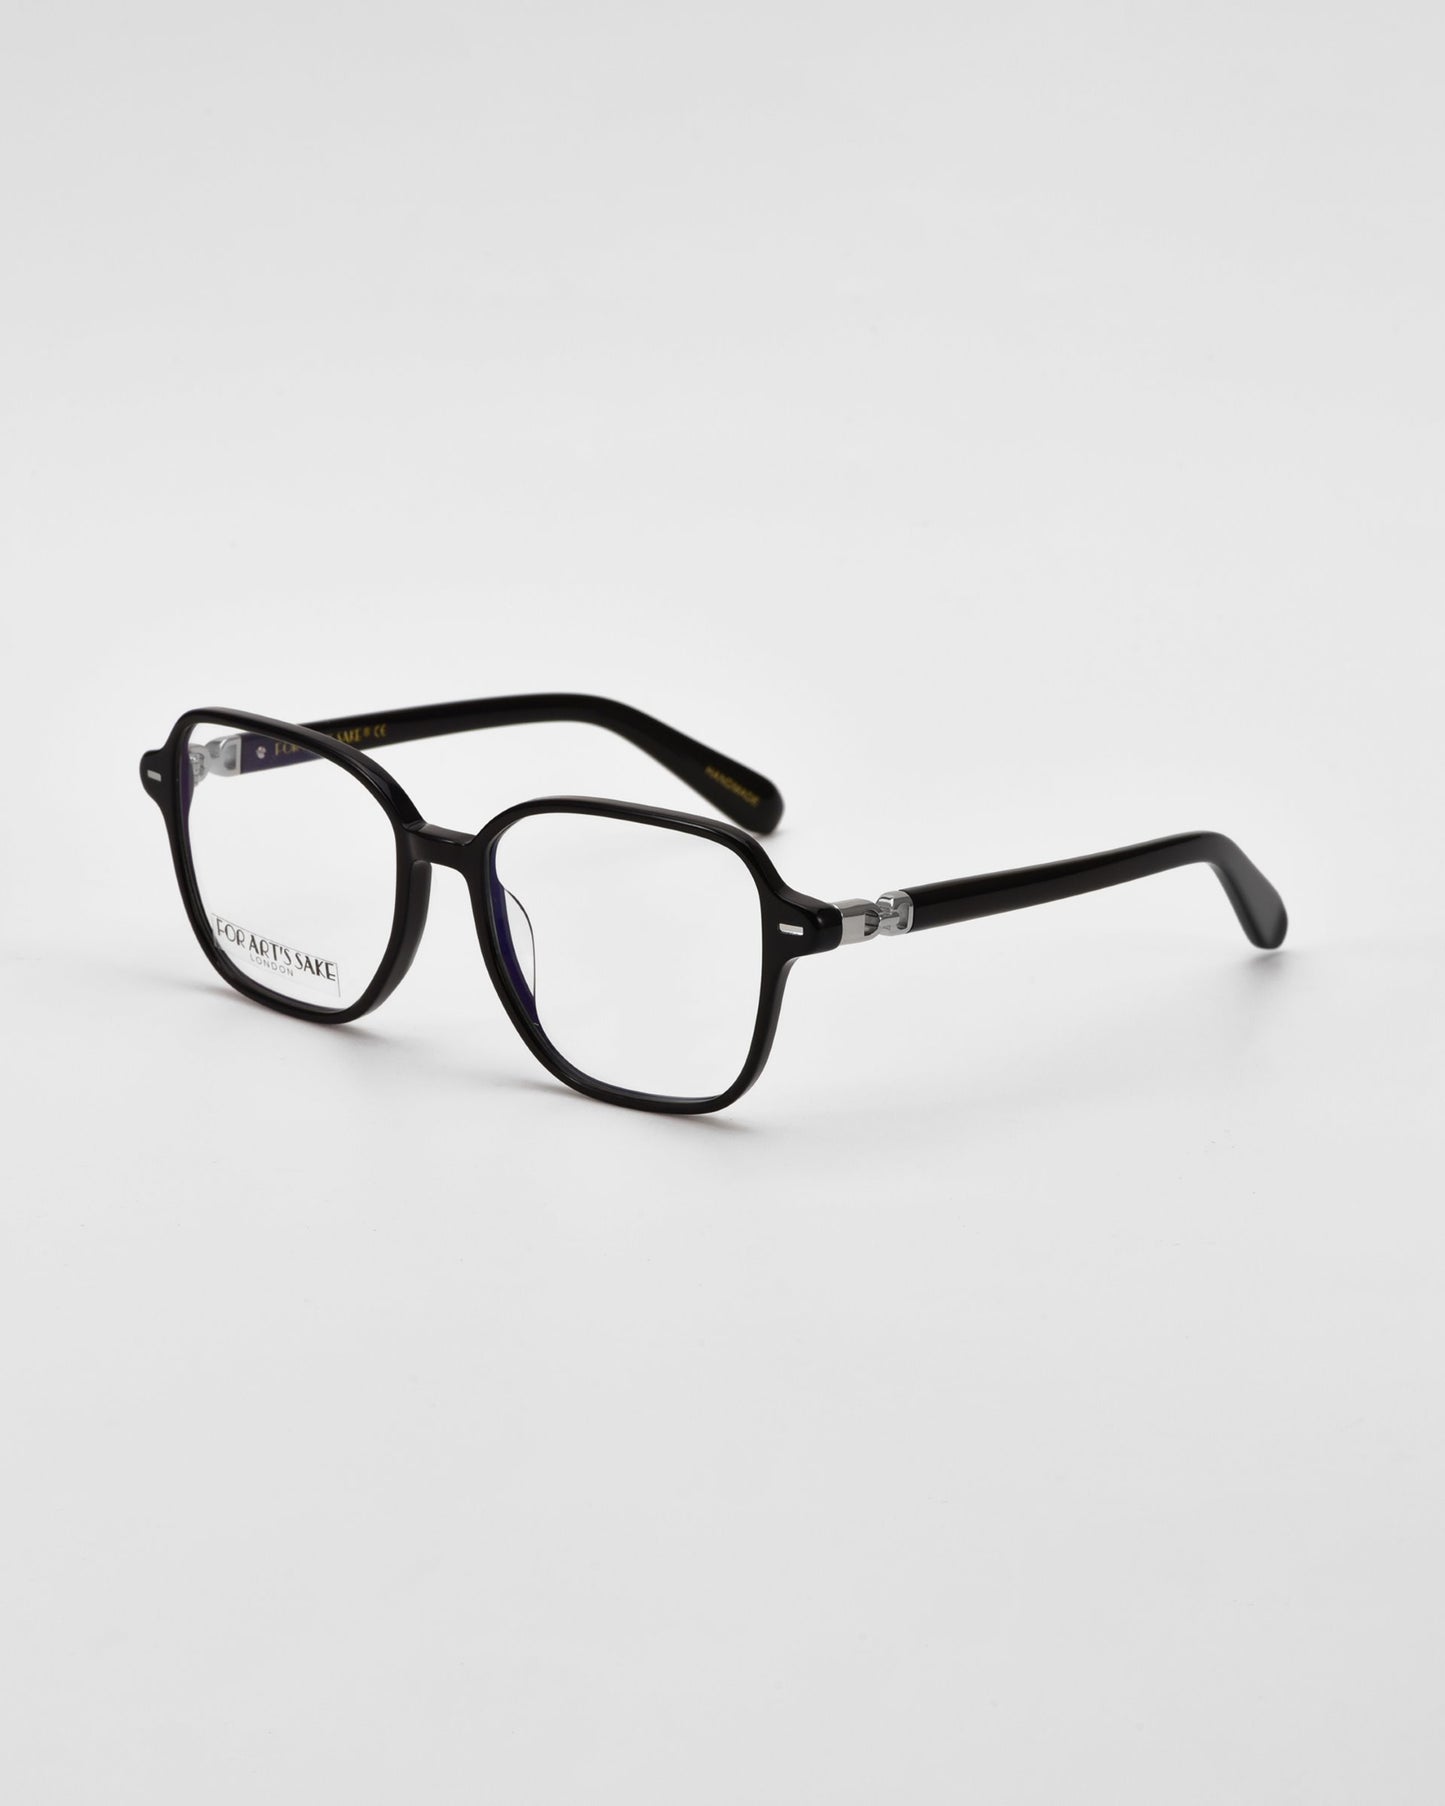 Black cat-eye framed optical glasses on a white background facing sidewards.